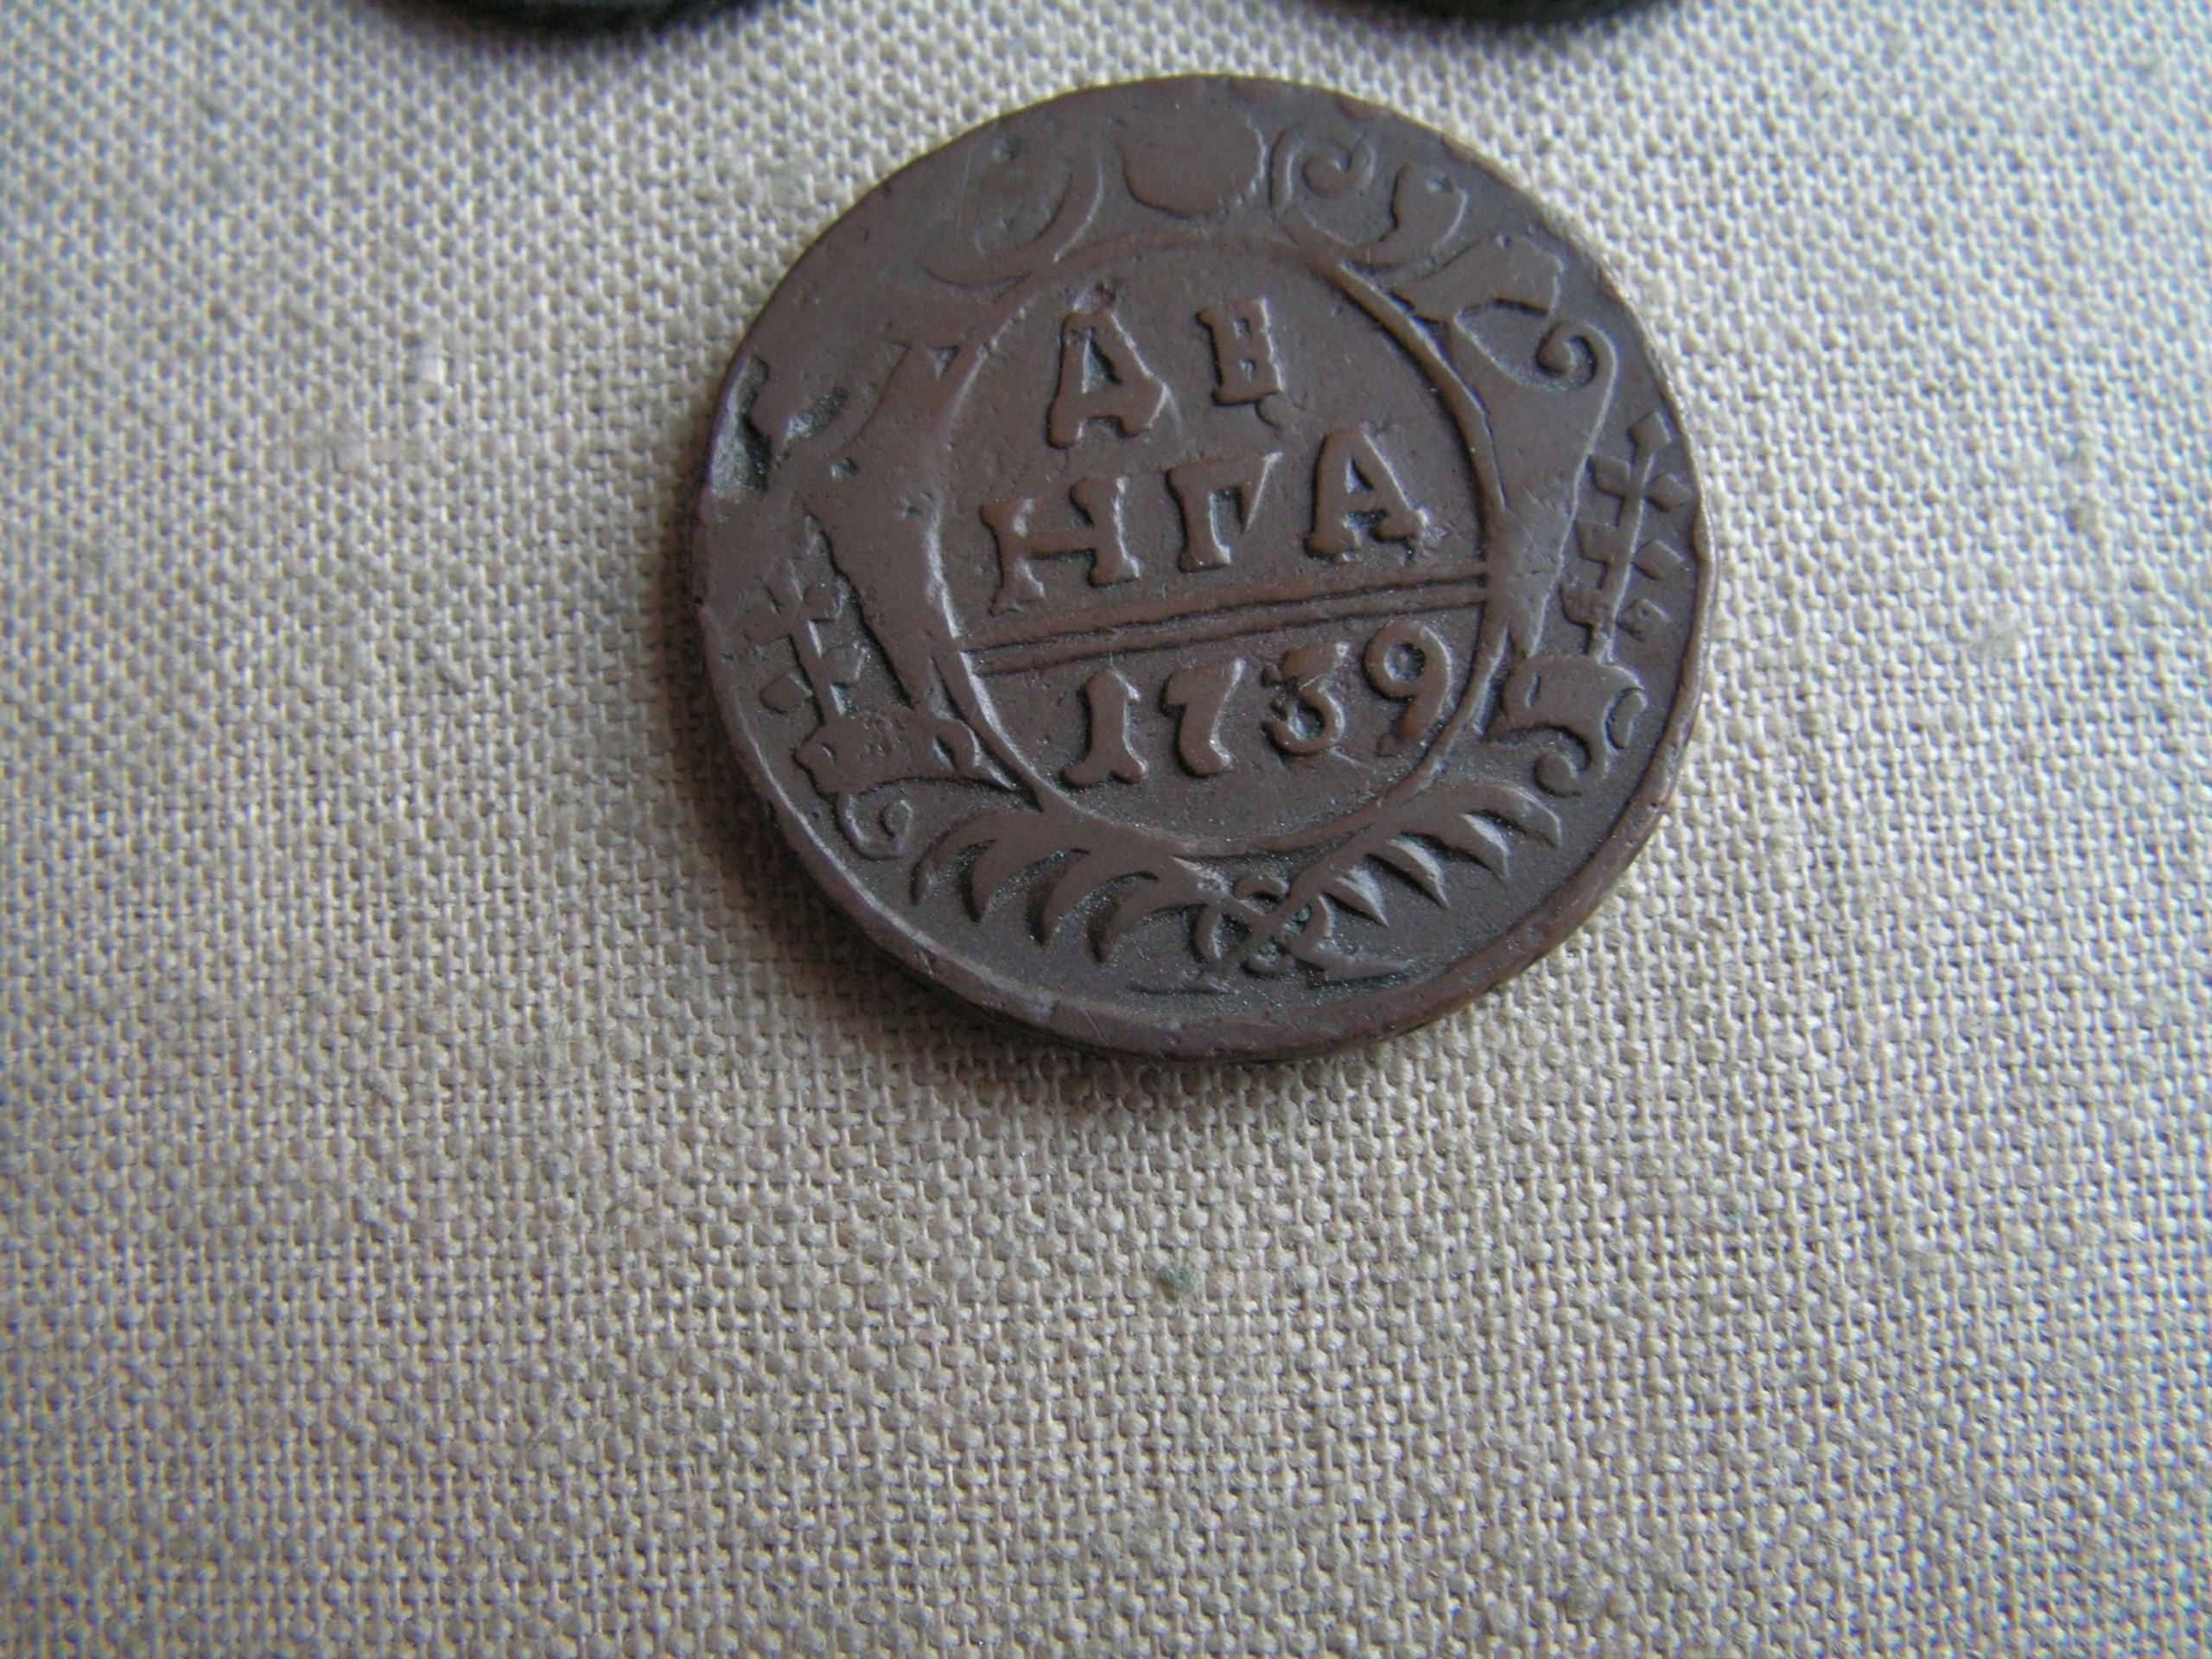 Rosja carska, 3 monety, połuszki i dienga